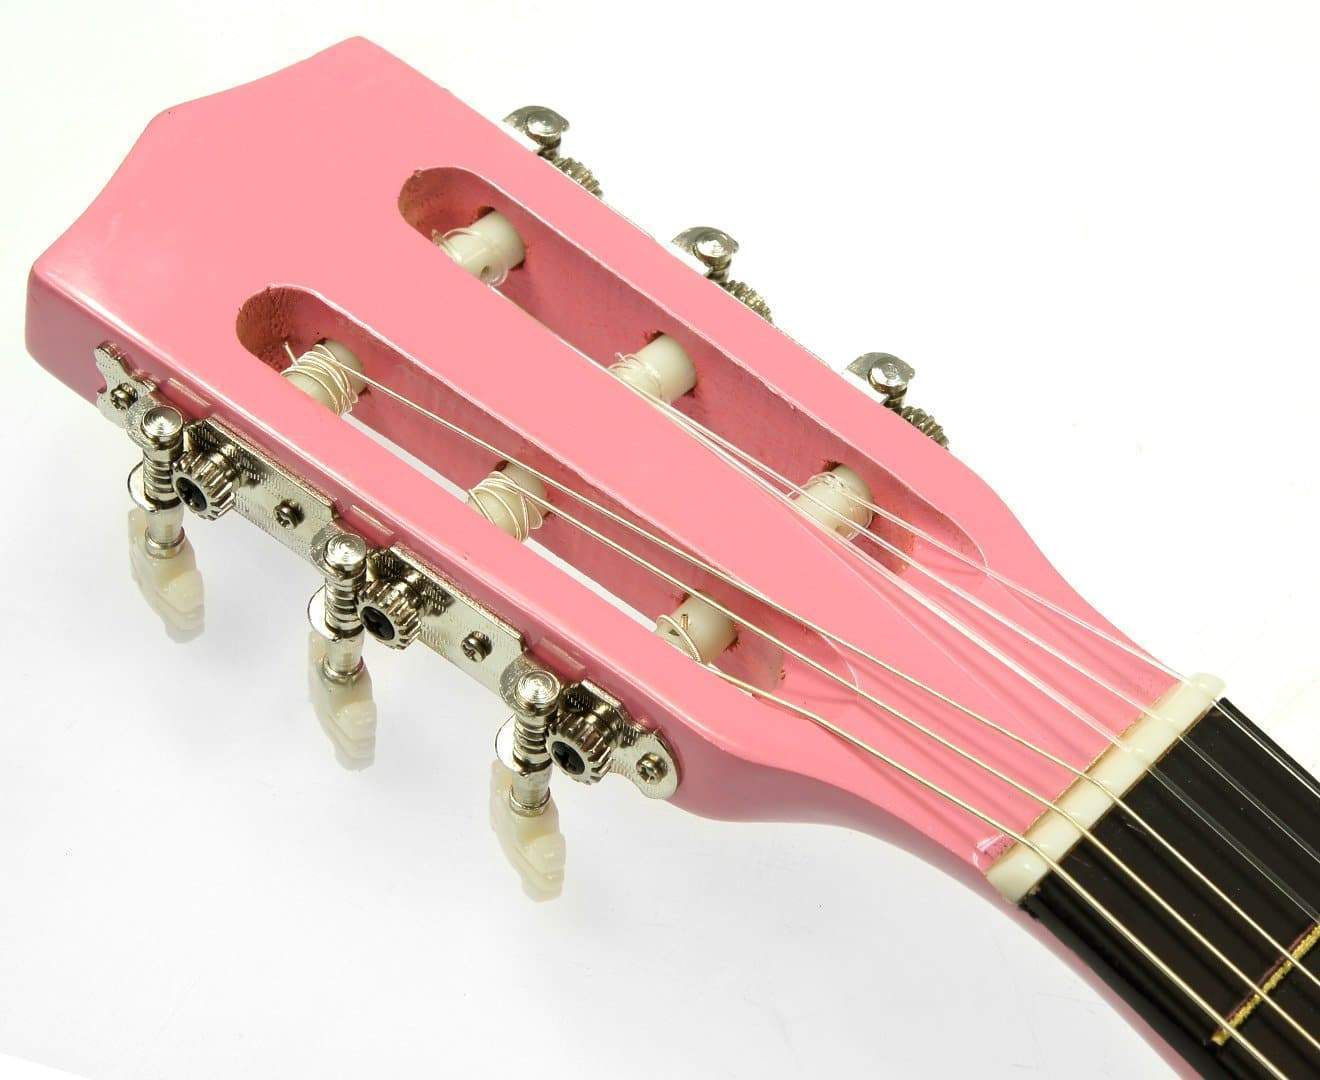 Karrera 34in Acoustic Children no cut Guitar - Pink